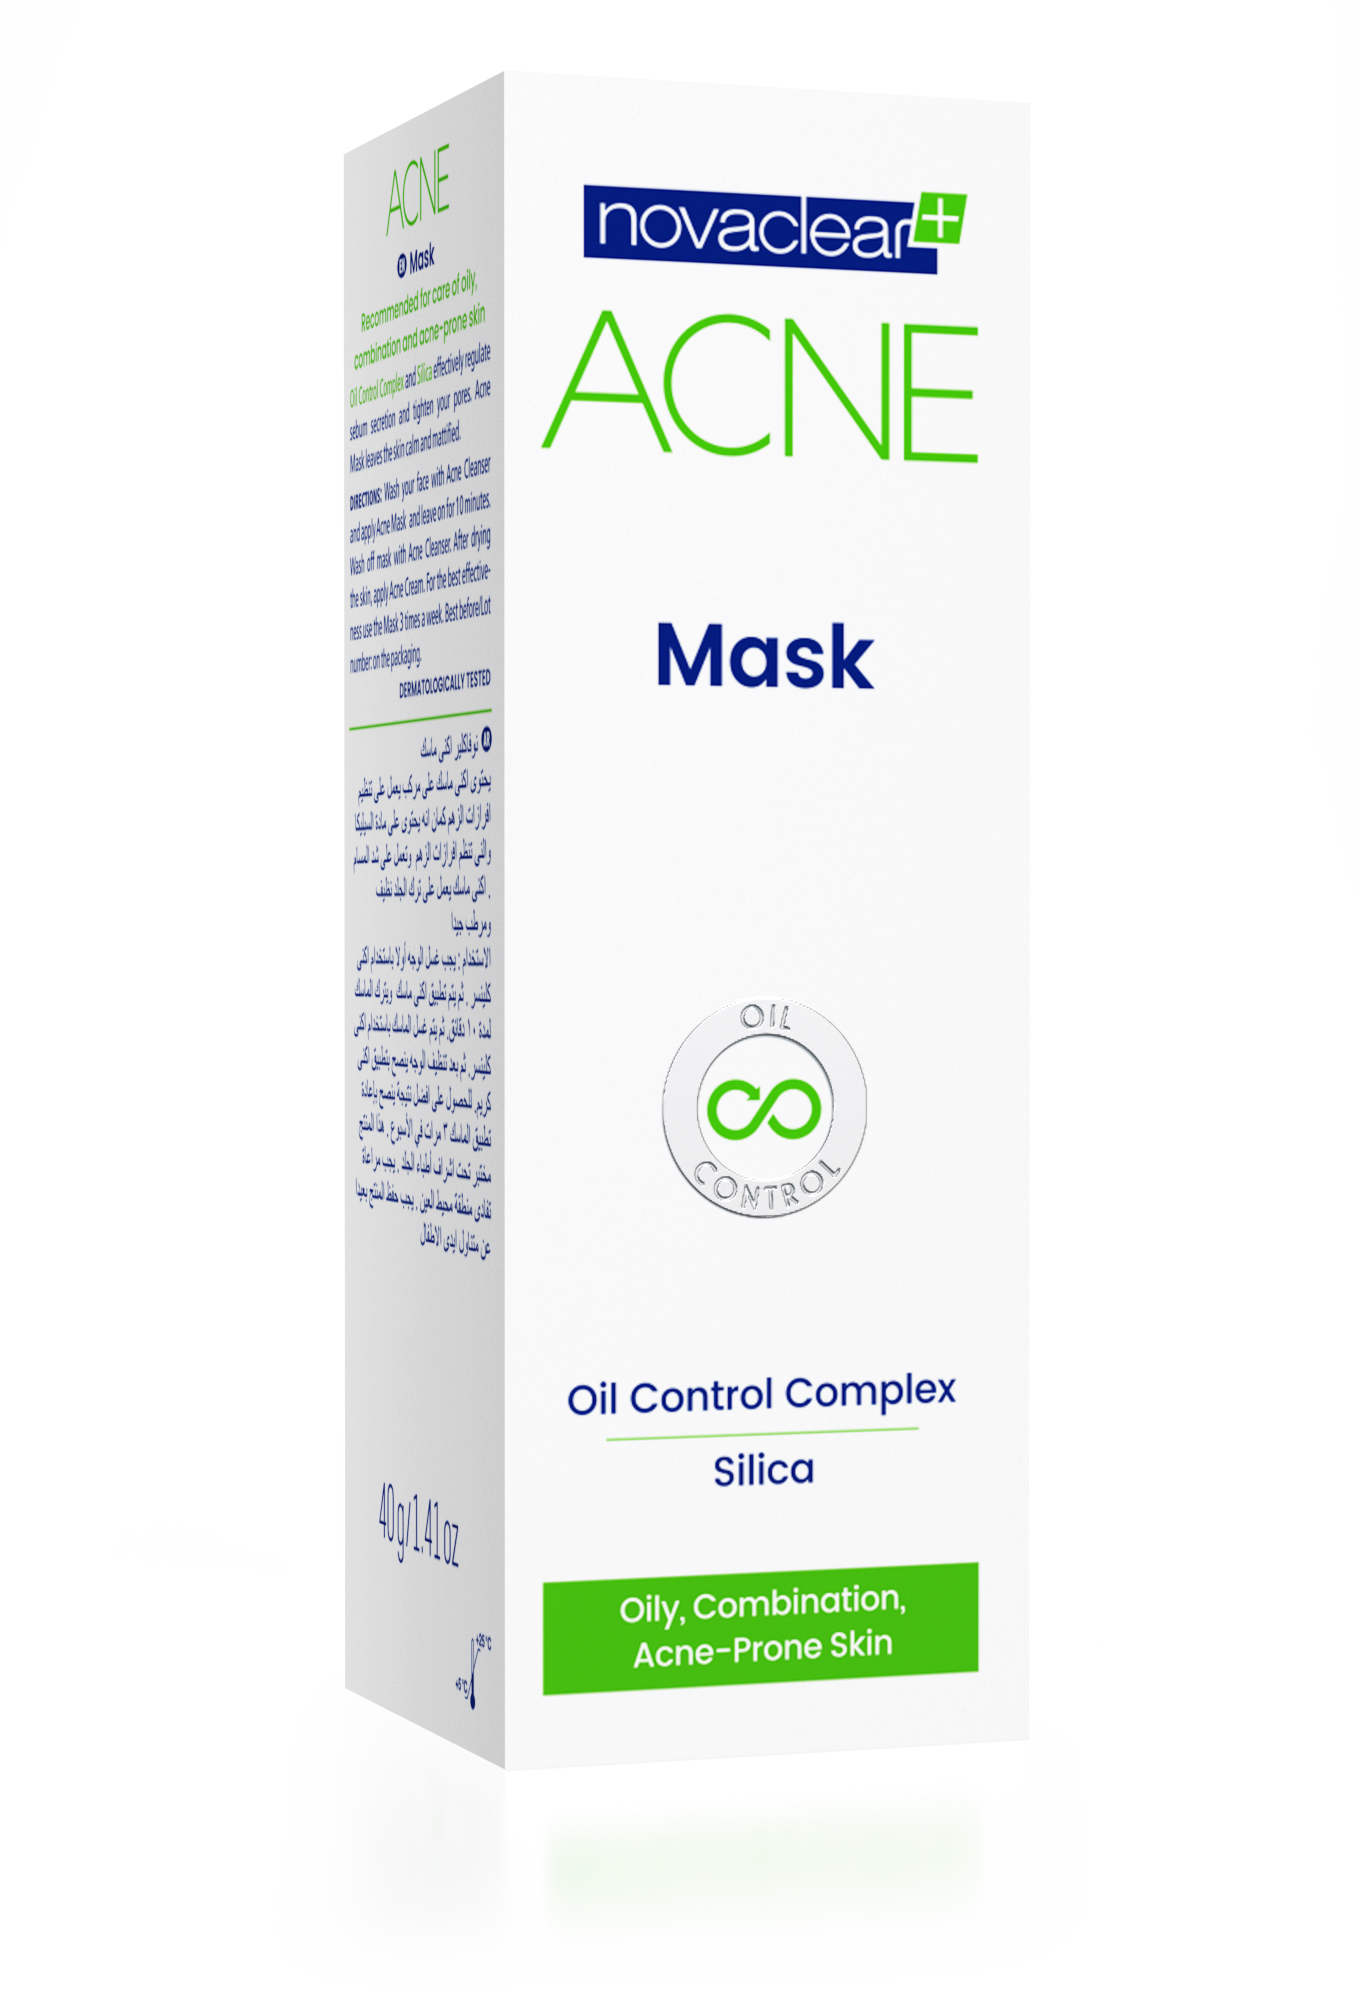 Acne Mask